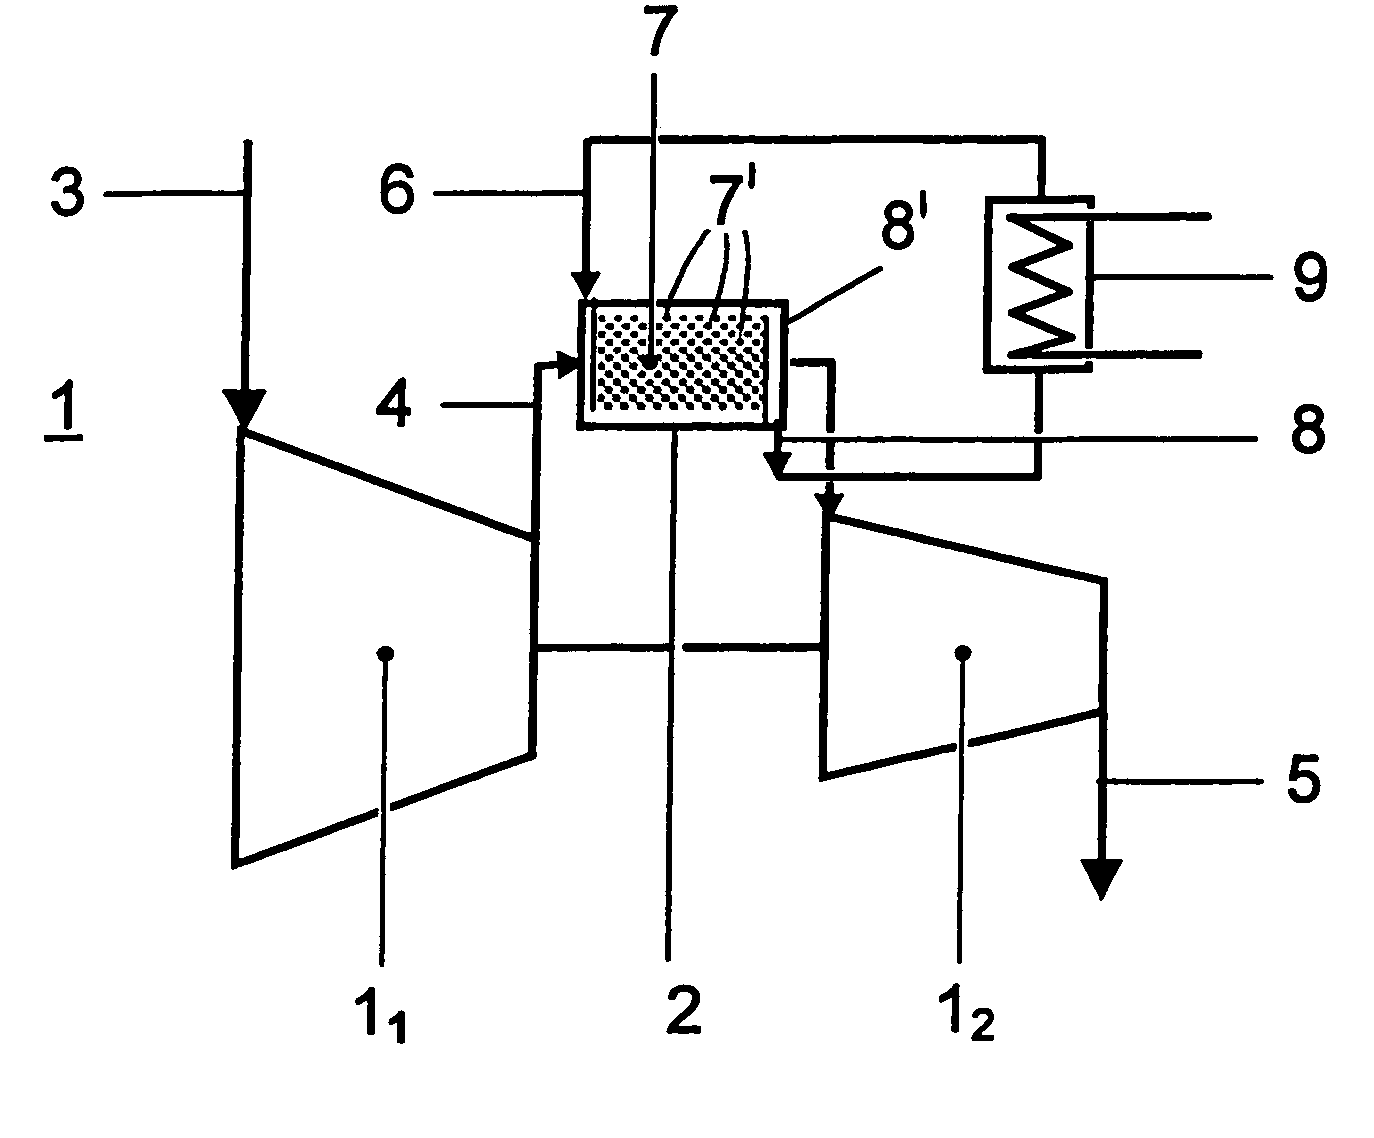 Method for operating a compressor